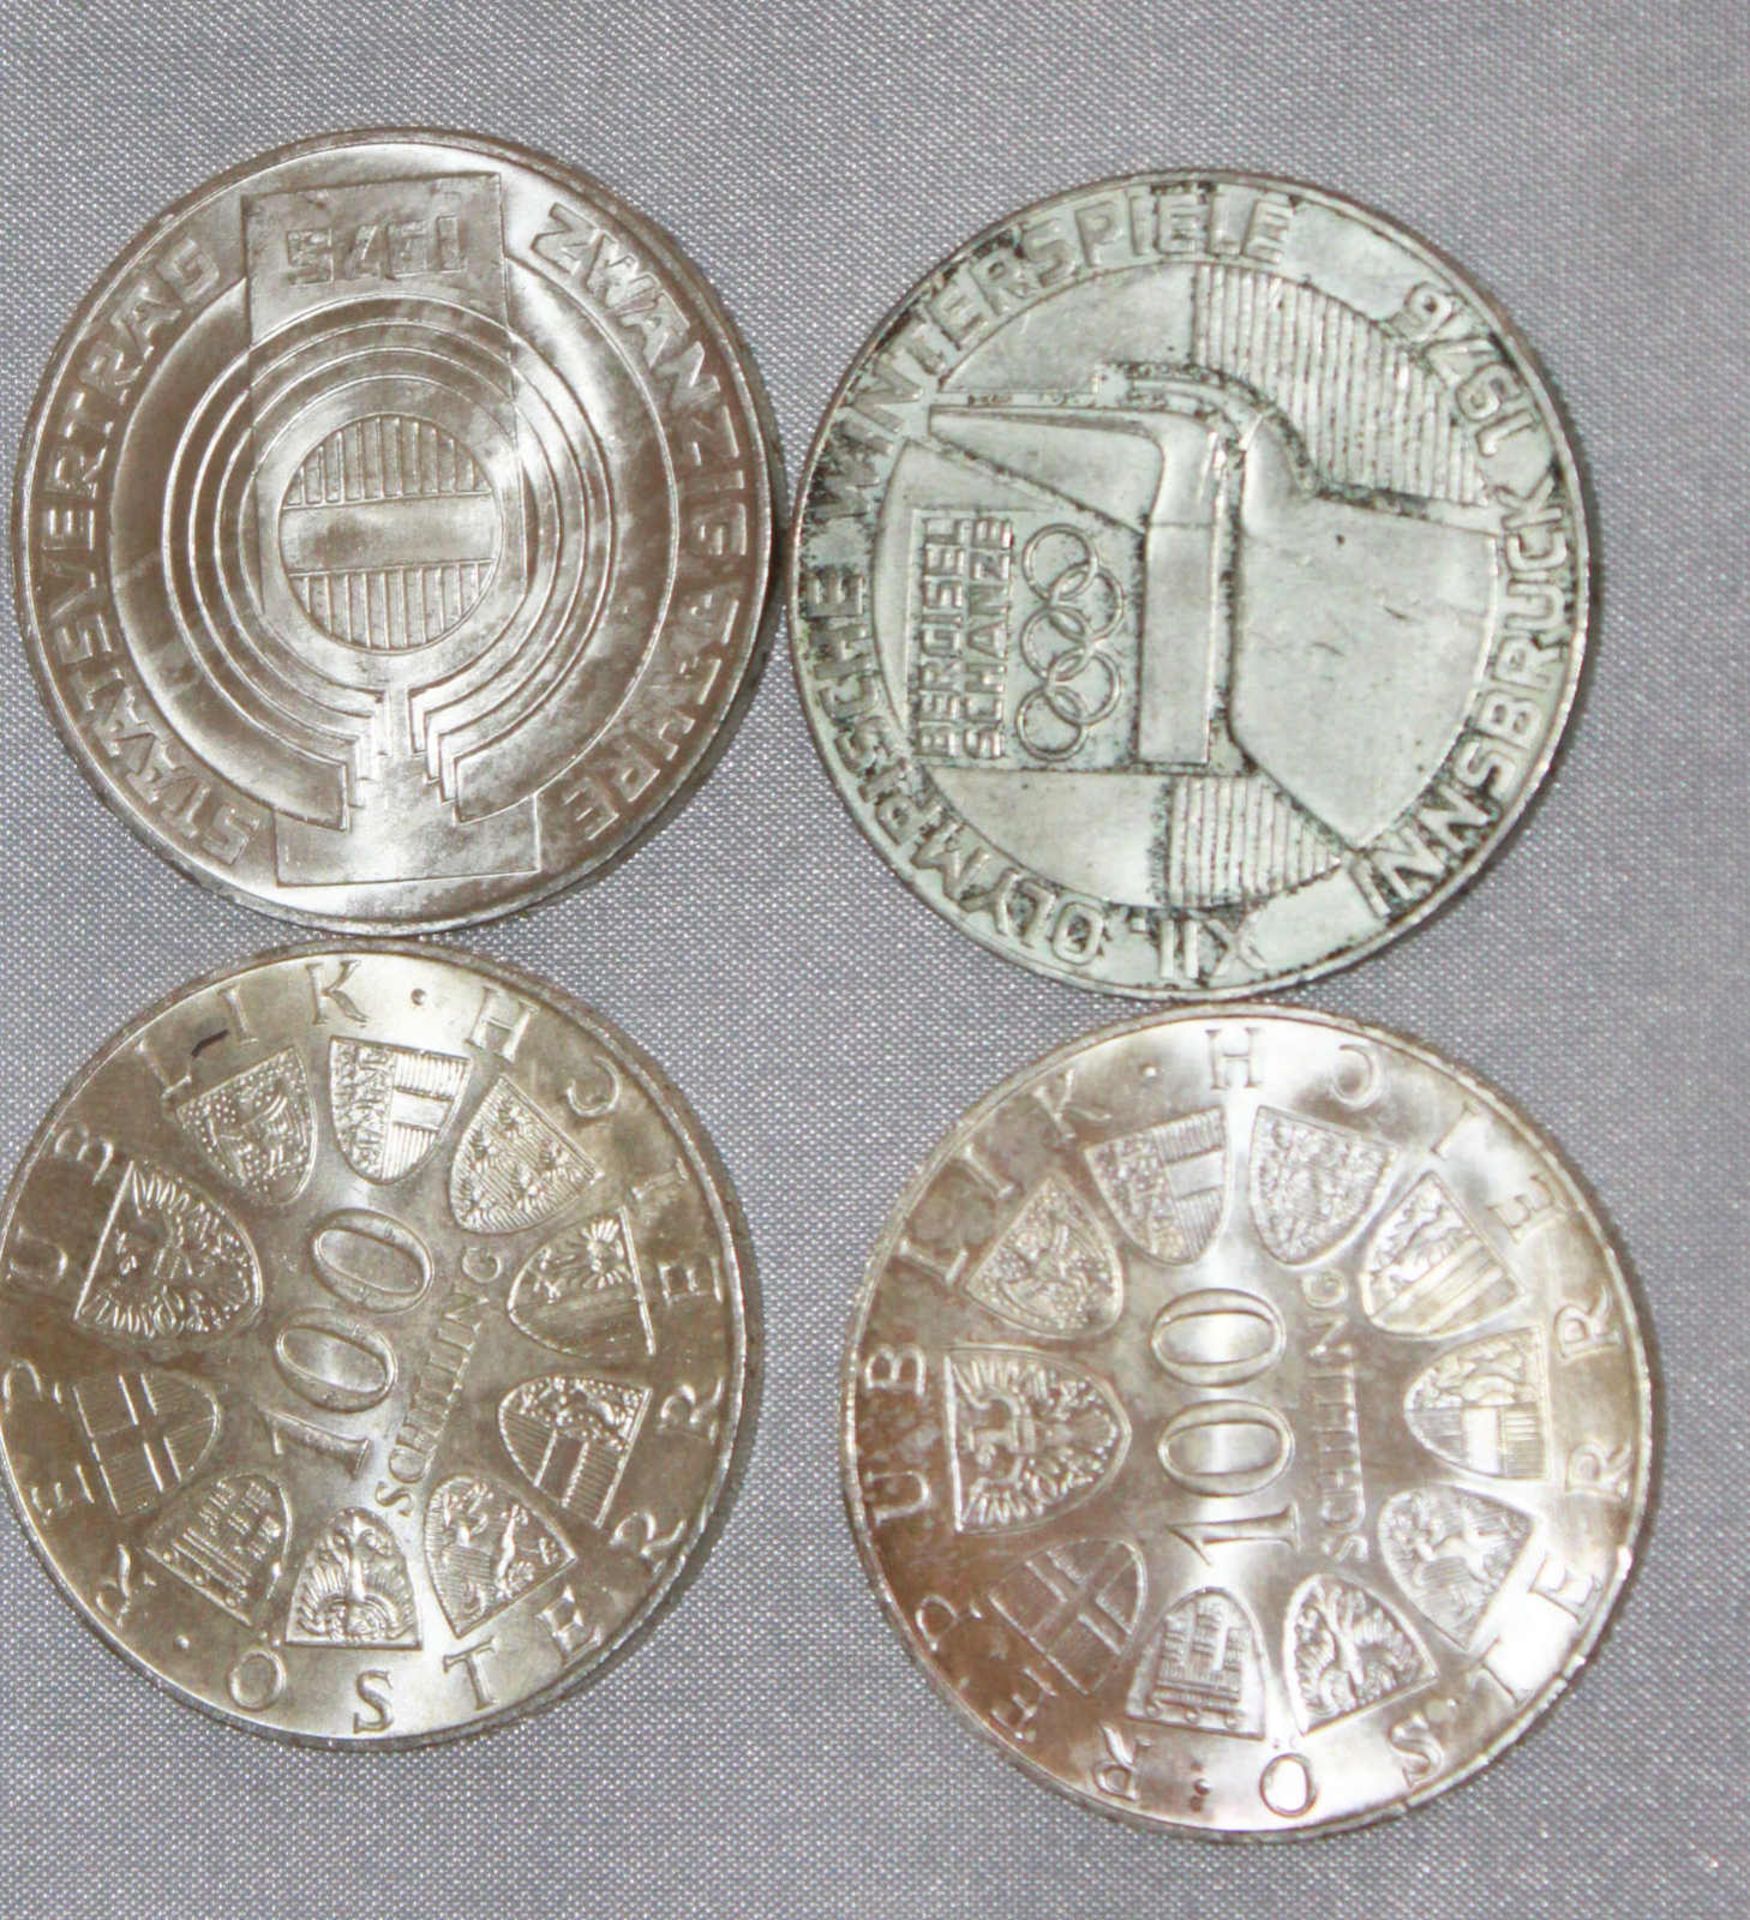 4 x 100 Schilling Münzen, Österreich 4 x 100 shillings of coins, Austria - Image 2 of 2